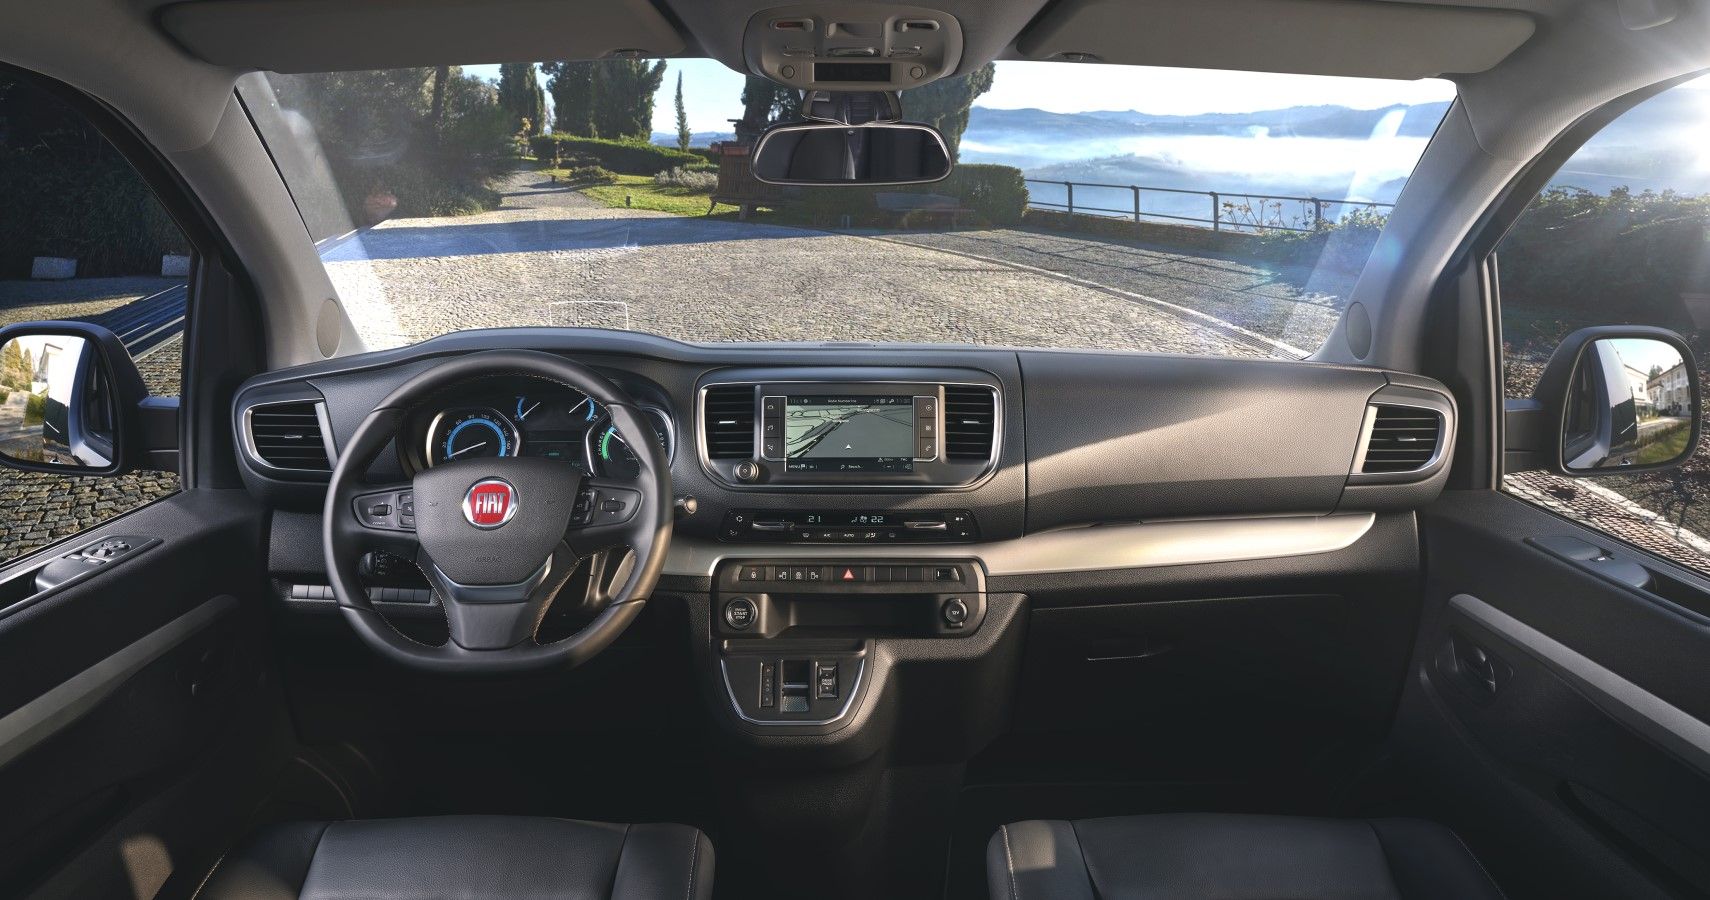 2022 Fiat E-Ulysse dashboard layout view